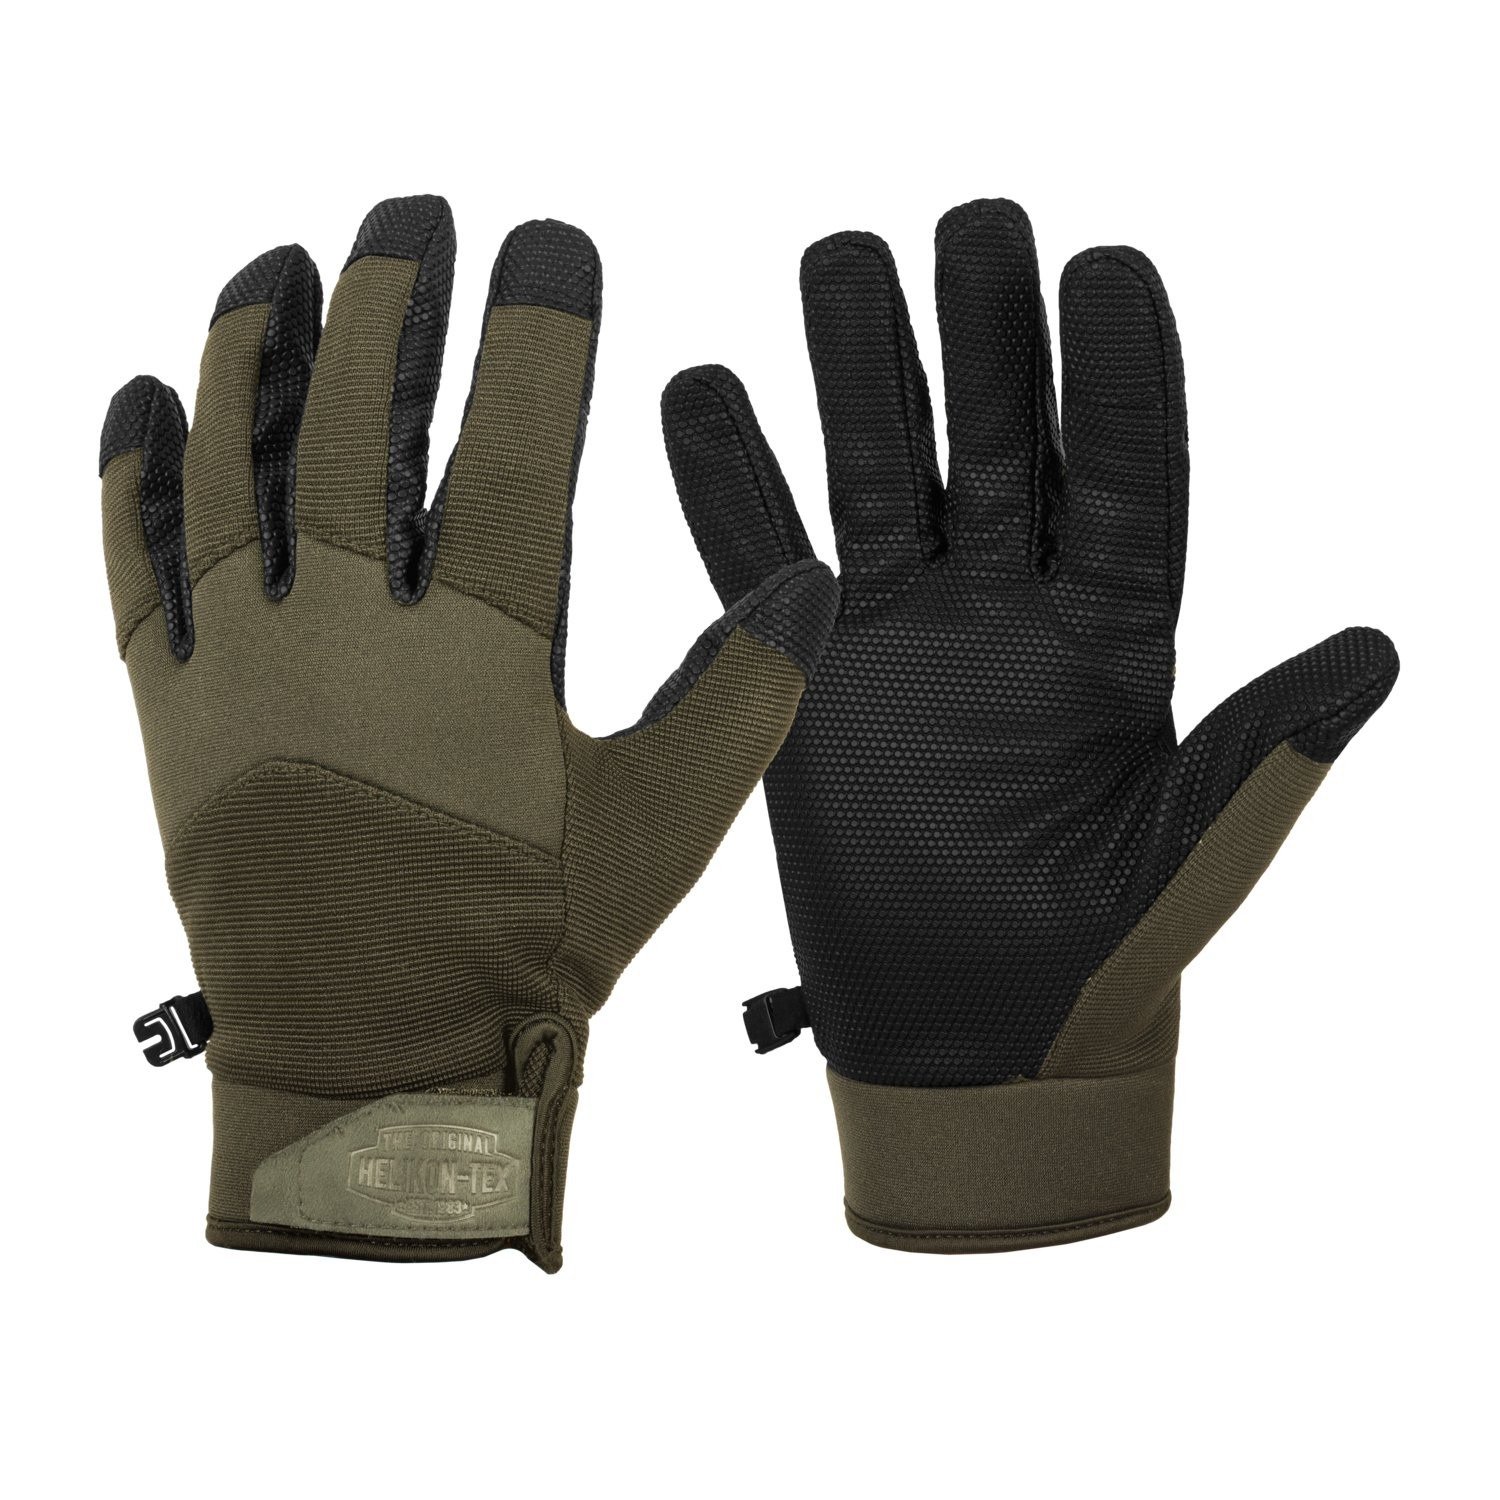 IMPACT DUTY WINTER MK2 GLOVES winter tactical gloves - Tactical beard